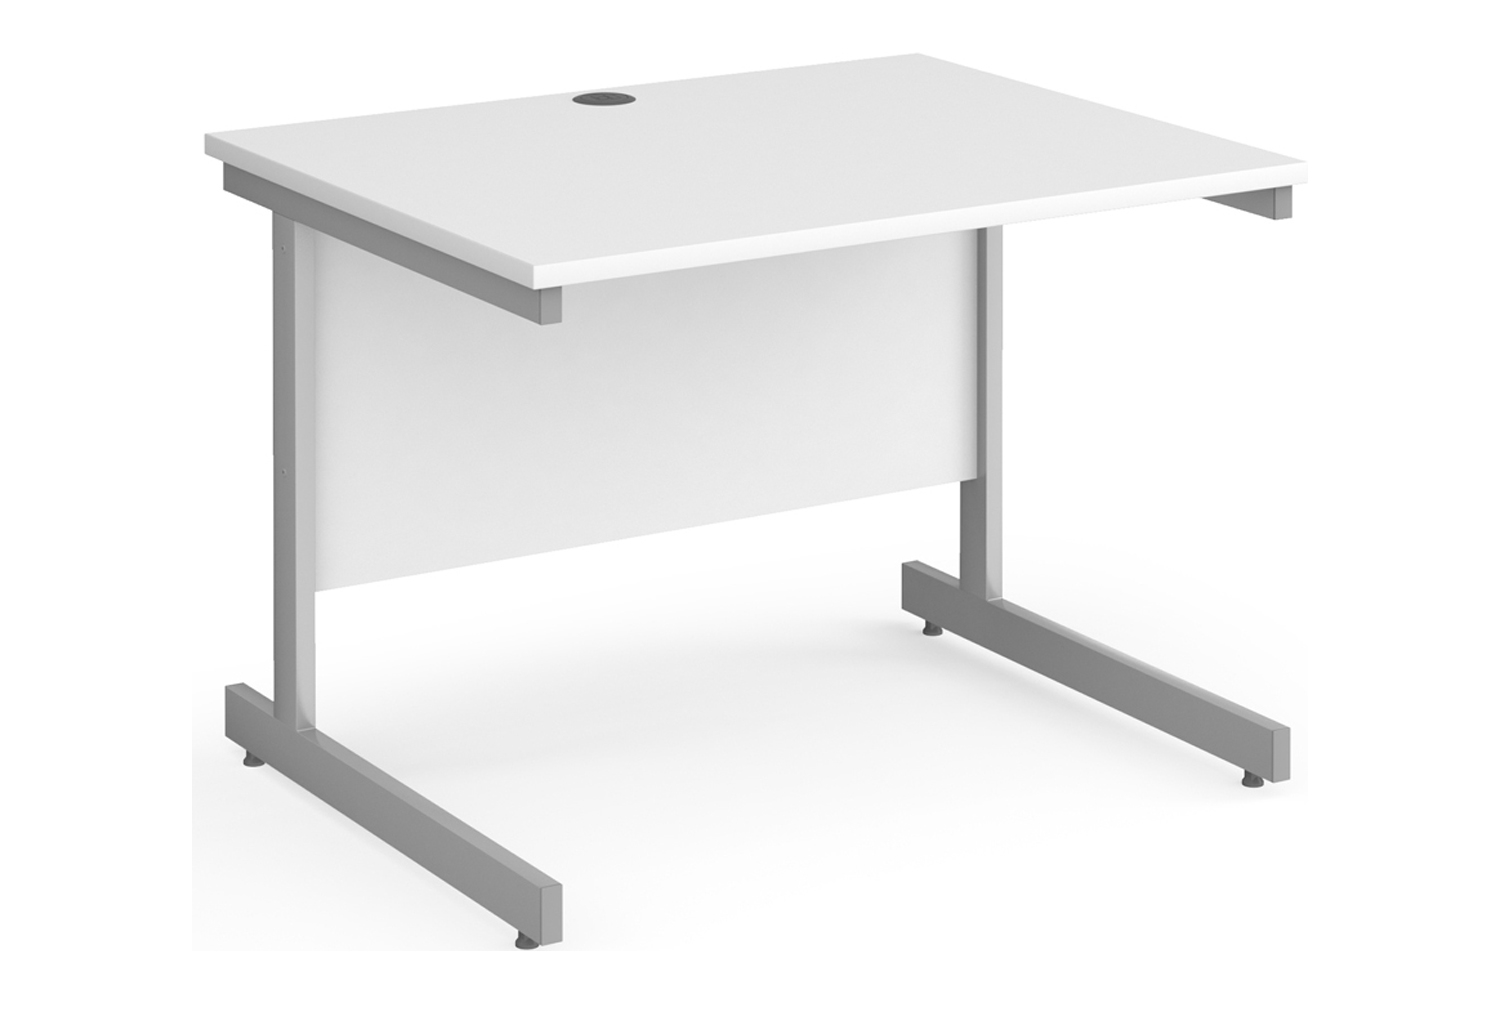 Value Line Classic+ Rectangular C-Leg Office Desk (Graphite Leg), 100wx80dx73h (cm), White, Express Delivery